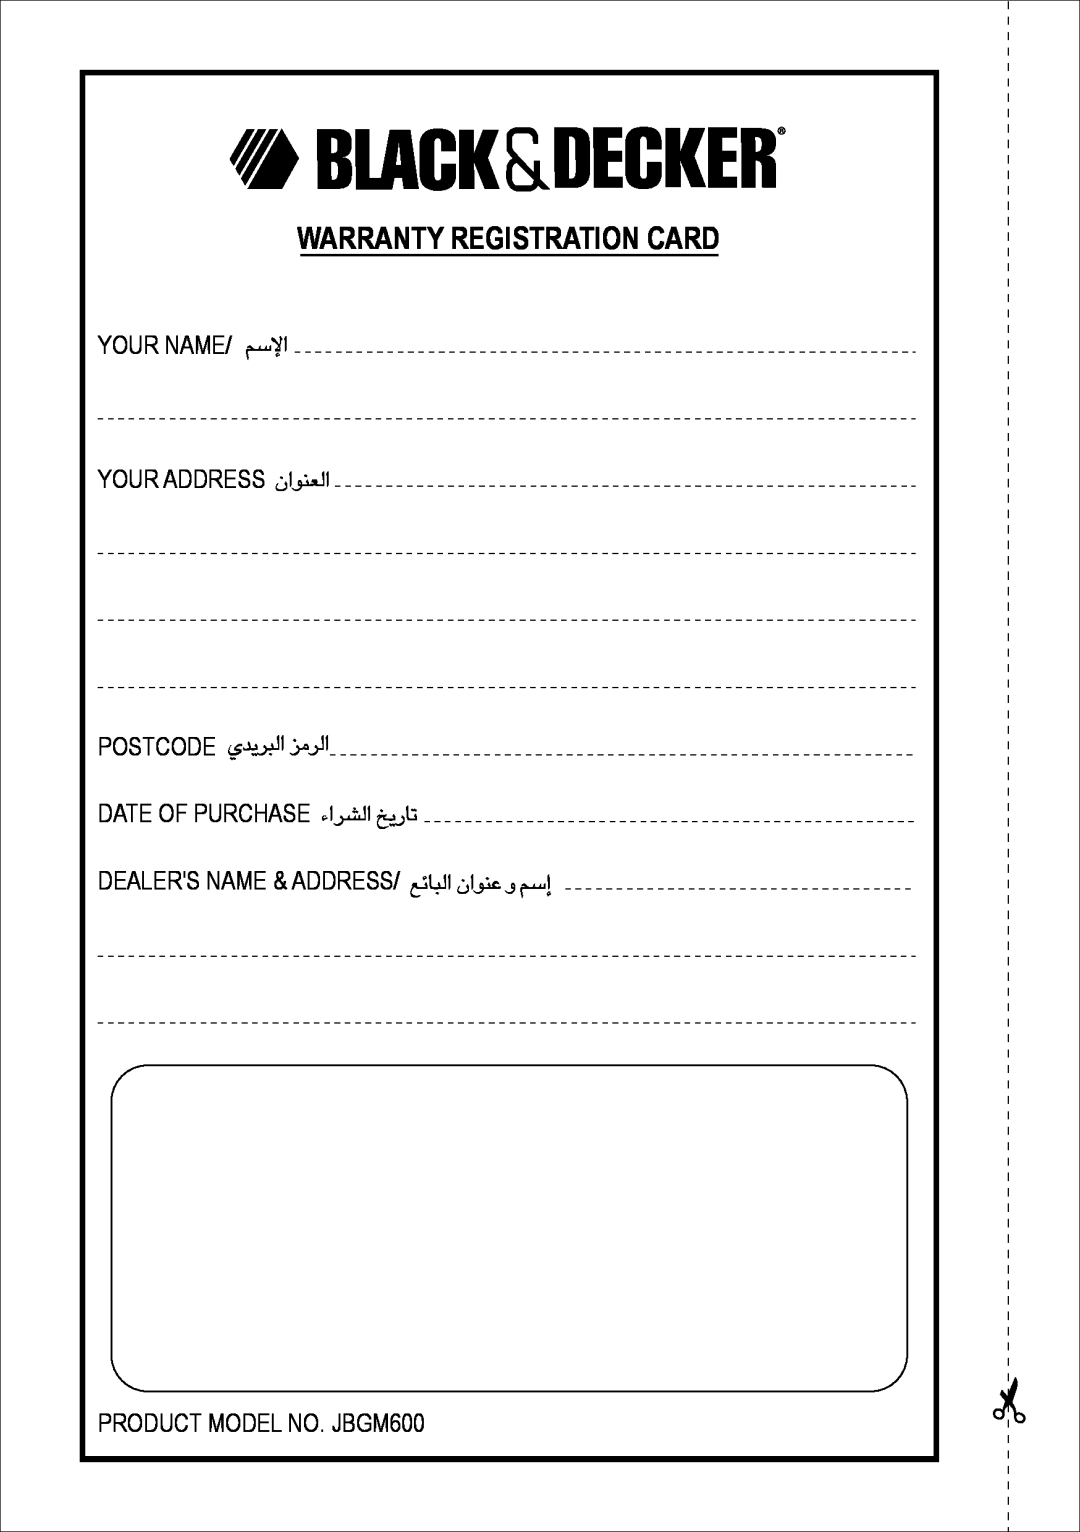 Black & Decker JBGM600-B5 manual Warranty Registration Card, «ùßr, «∞FMu«Ê, «∞∂d¥bÍ «∞d±e, «∞Ad«¡ ¢U¸¥a 